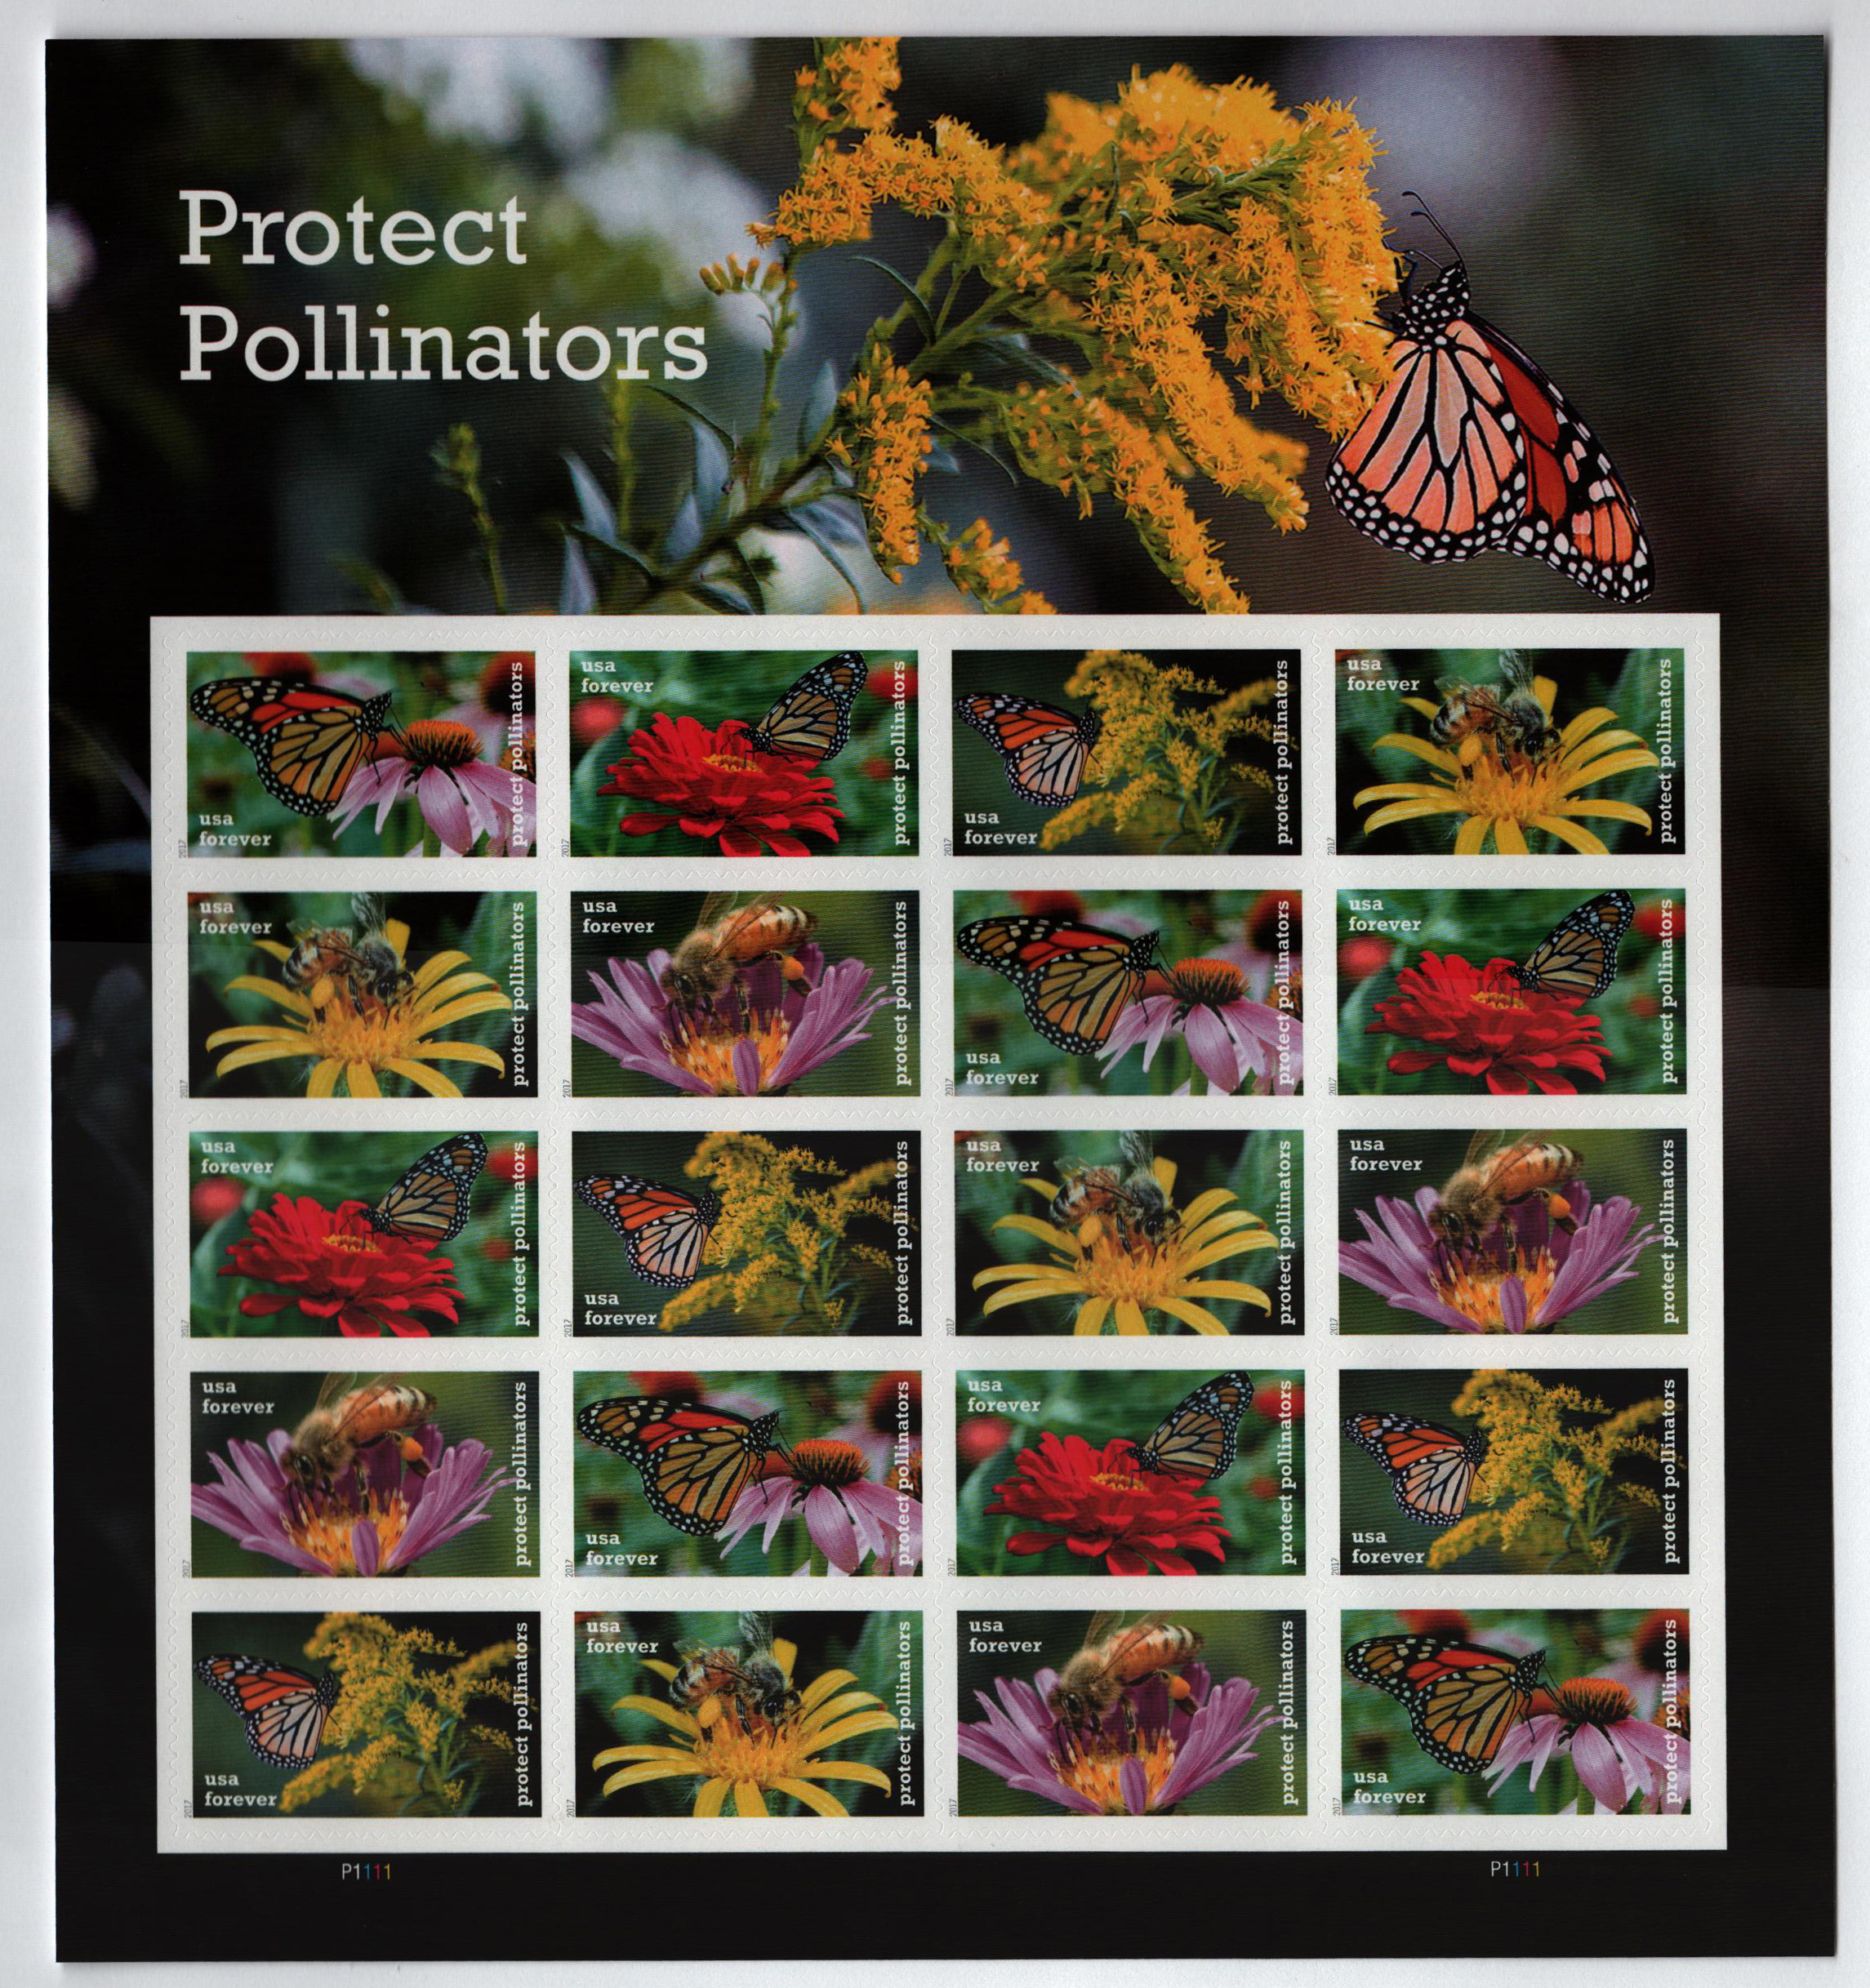 2017 Protect Pollinators